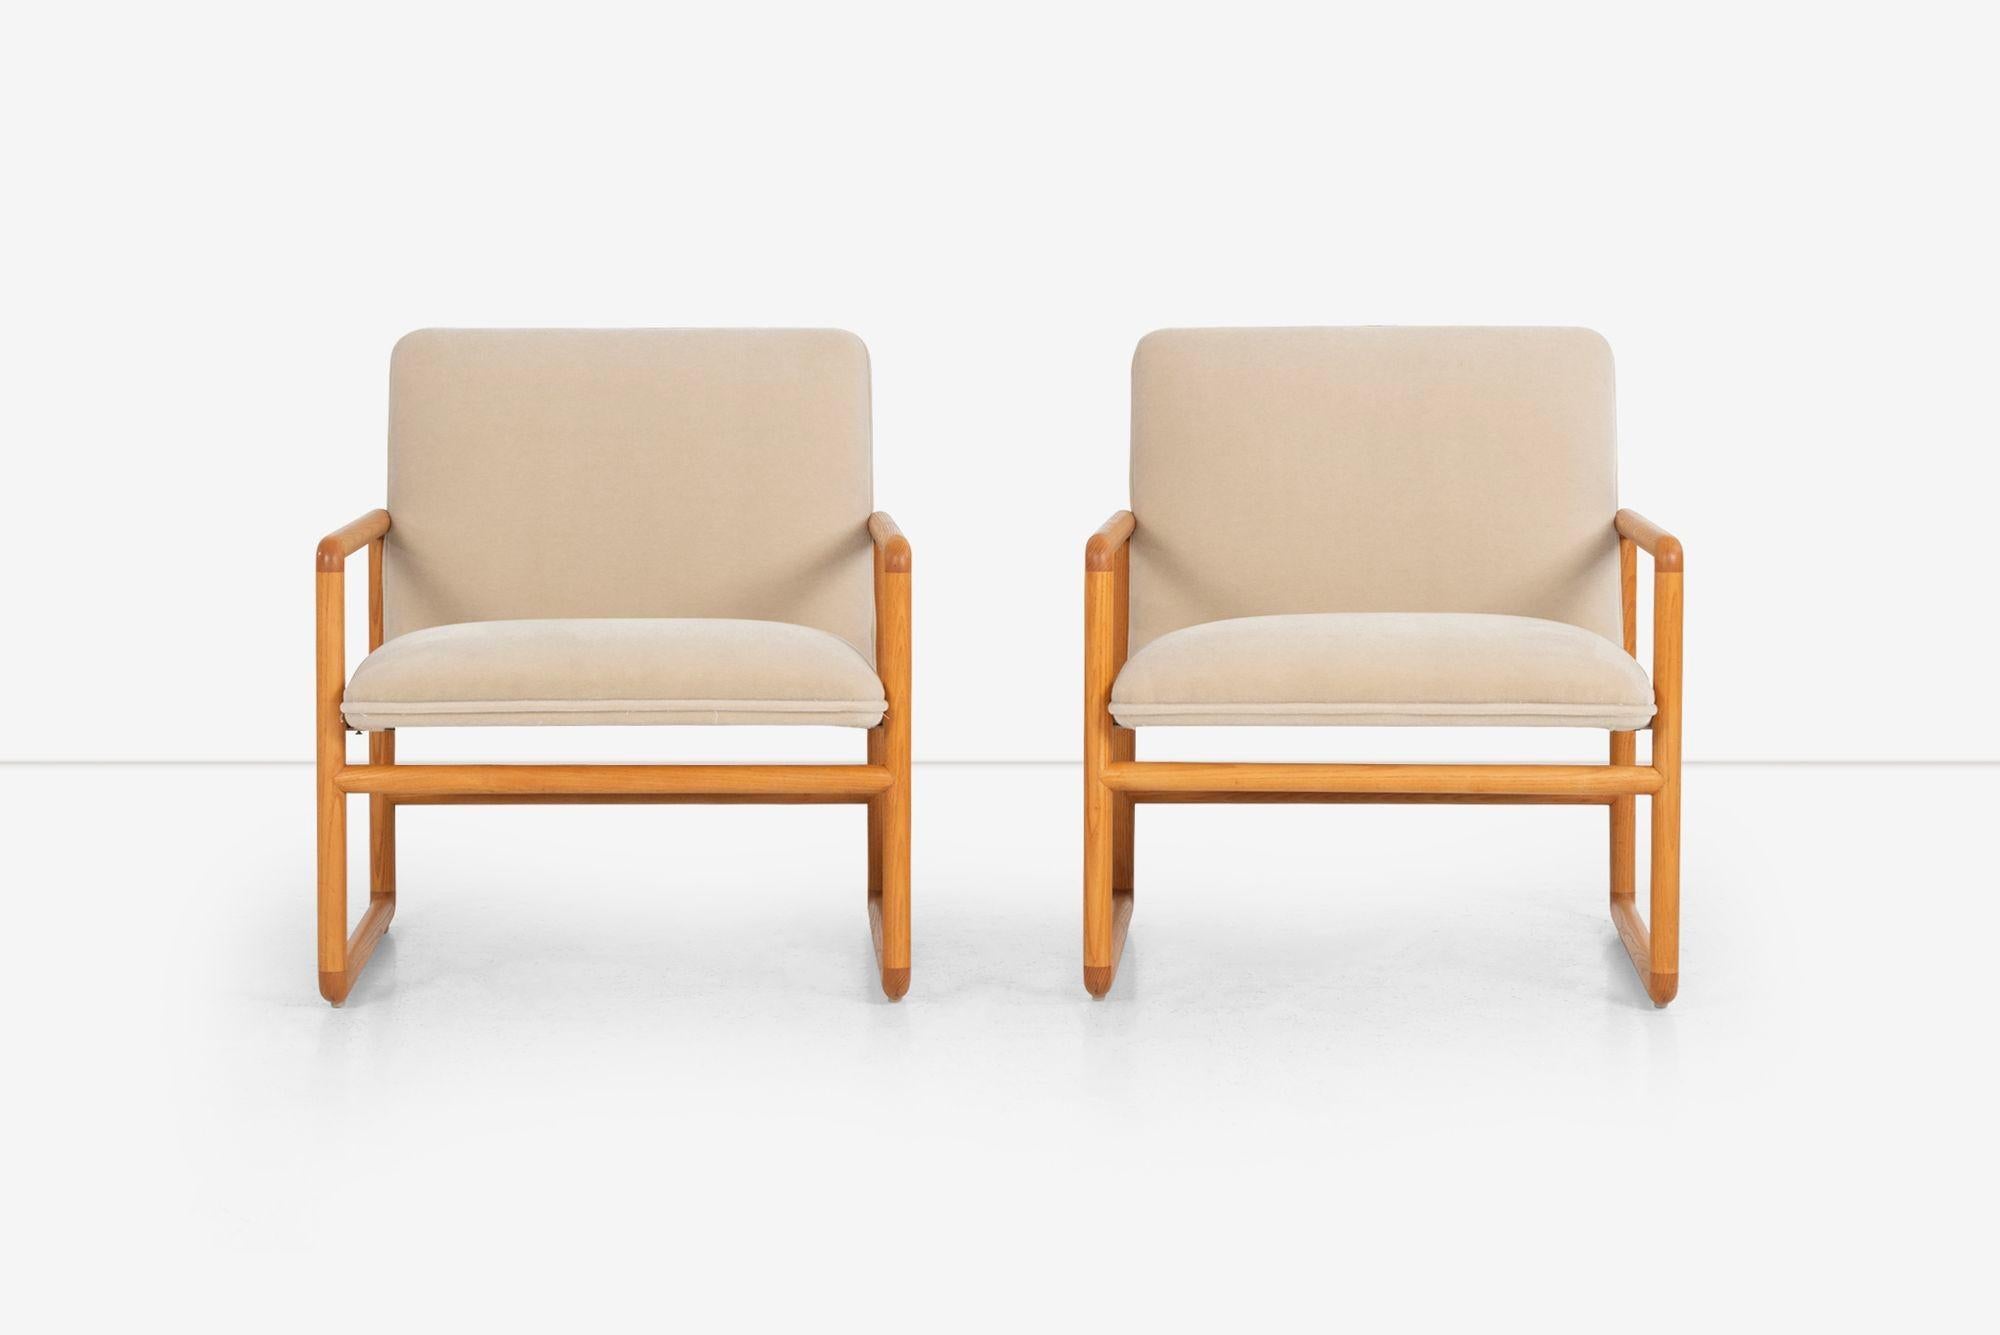 Mid-Century Modern Ward Bennett Lounge Chairs in Solid Oak for Brickel Associates 1965c. For Sale